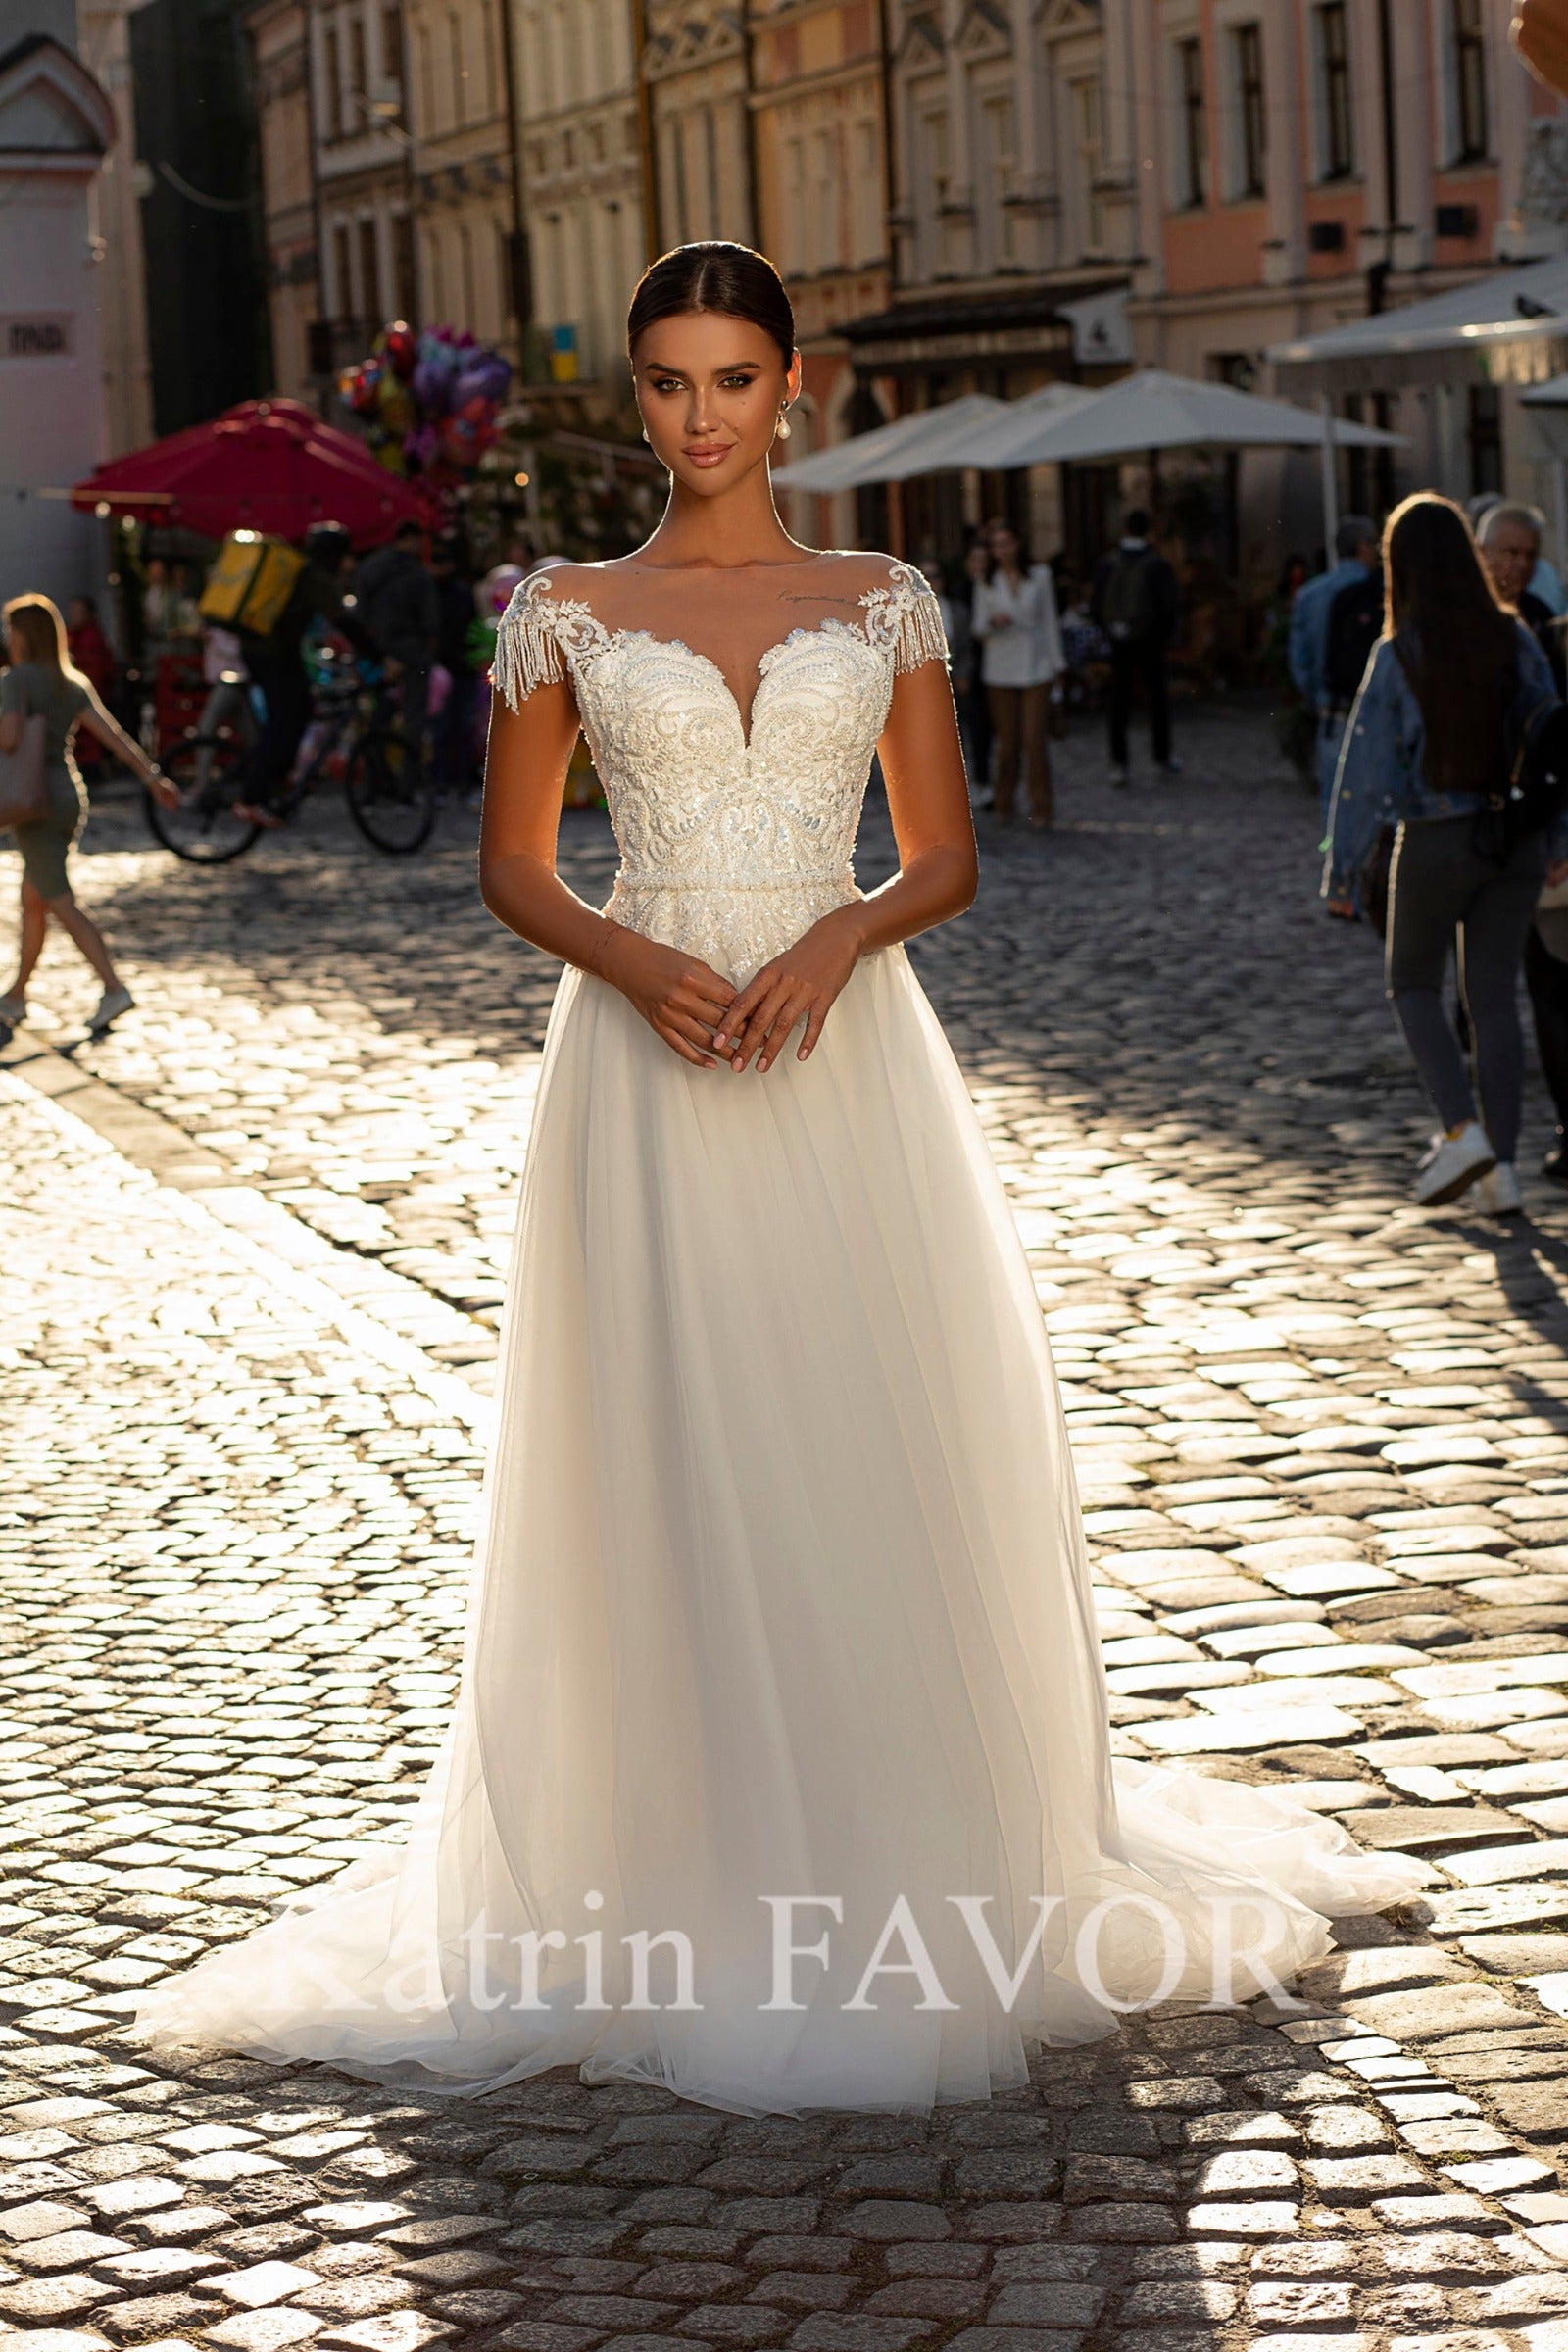 KatrinFAVORboutique-Beaded corset a-line wedding dress